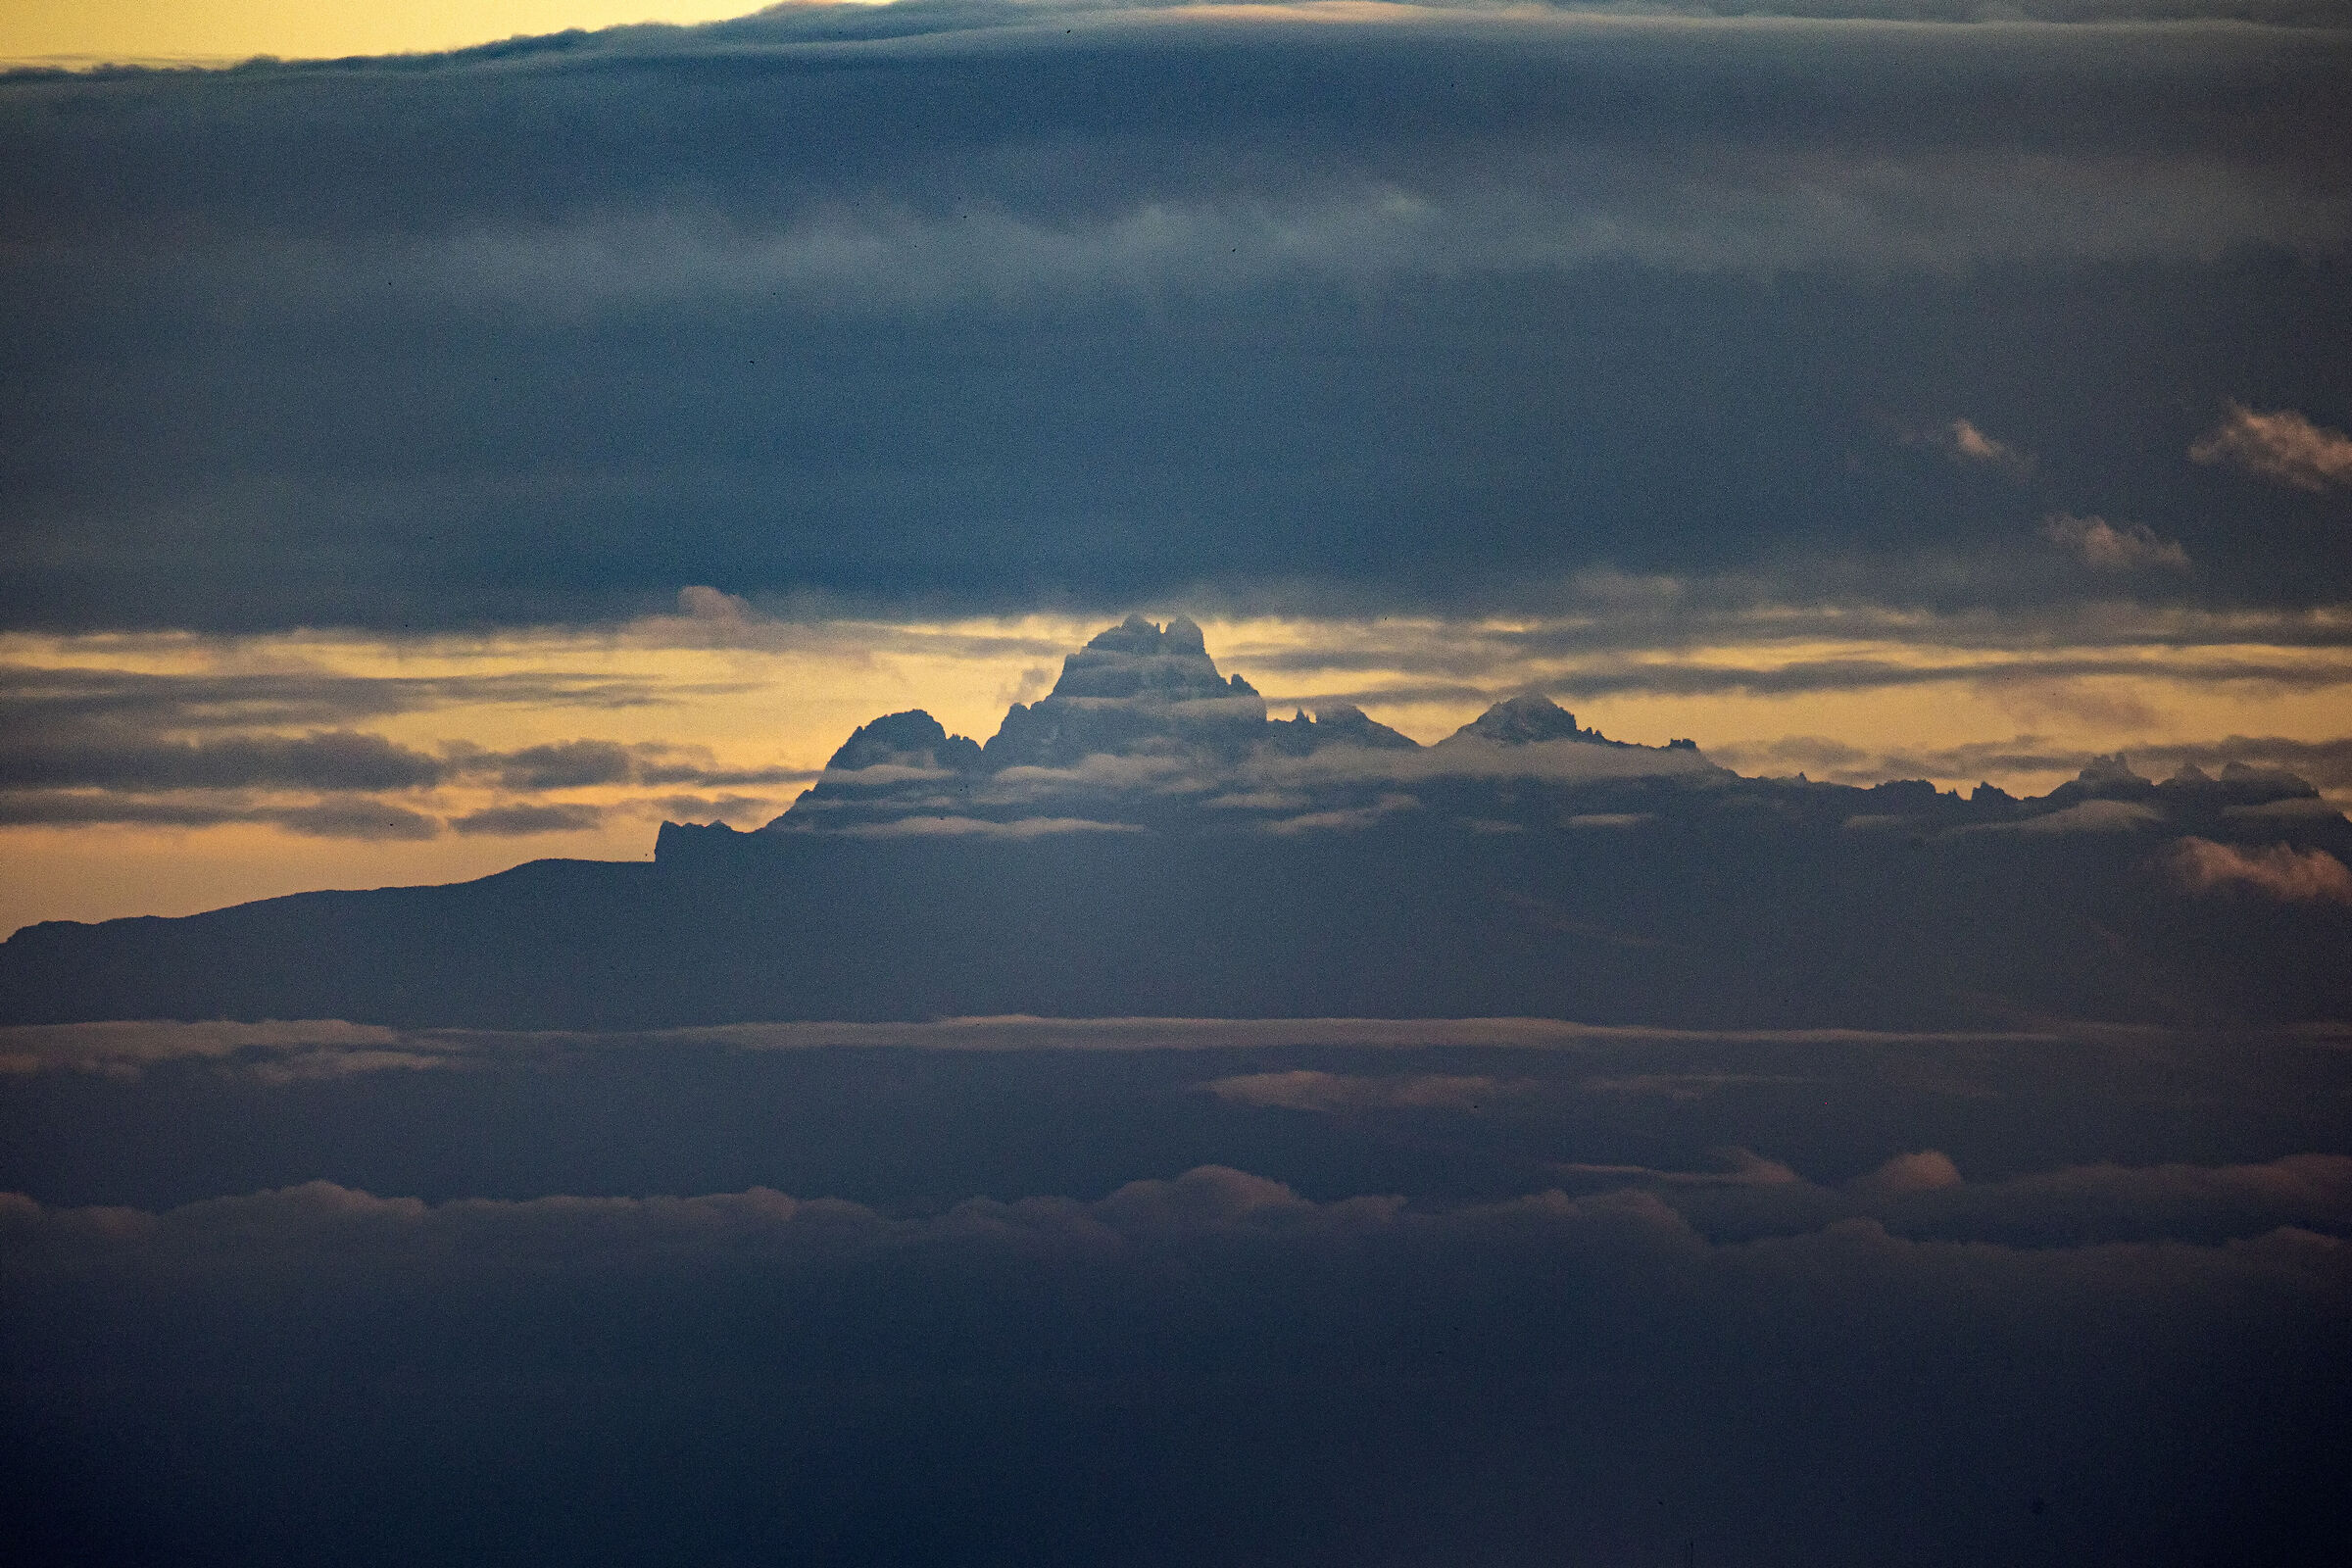 I believe Mount Kenya as seen from Nairobi...